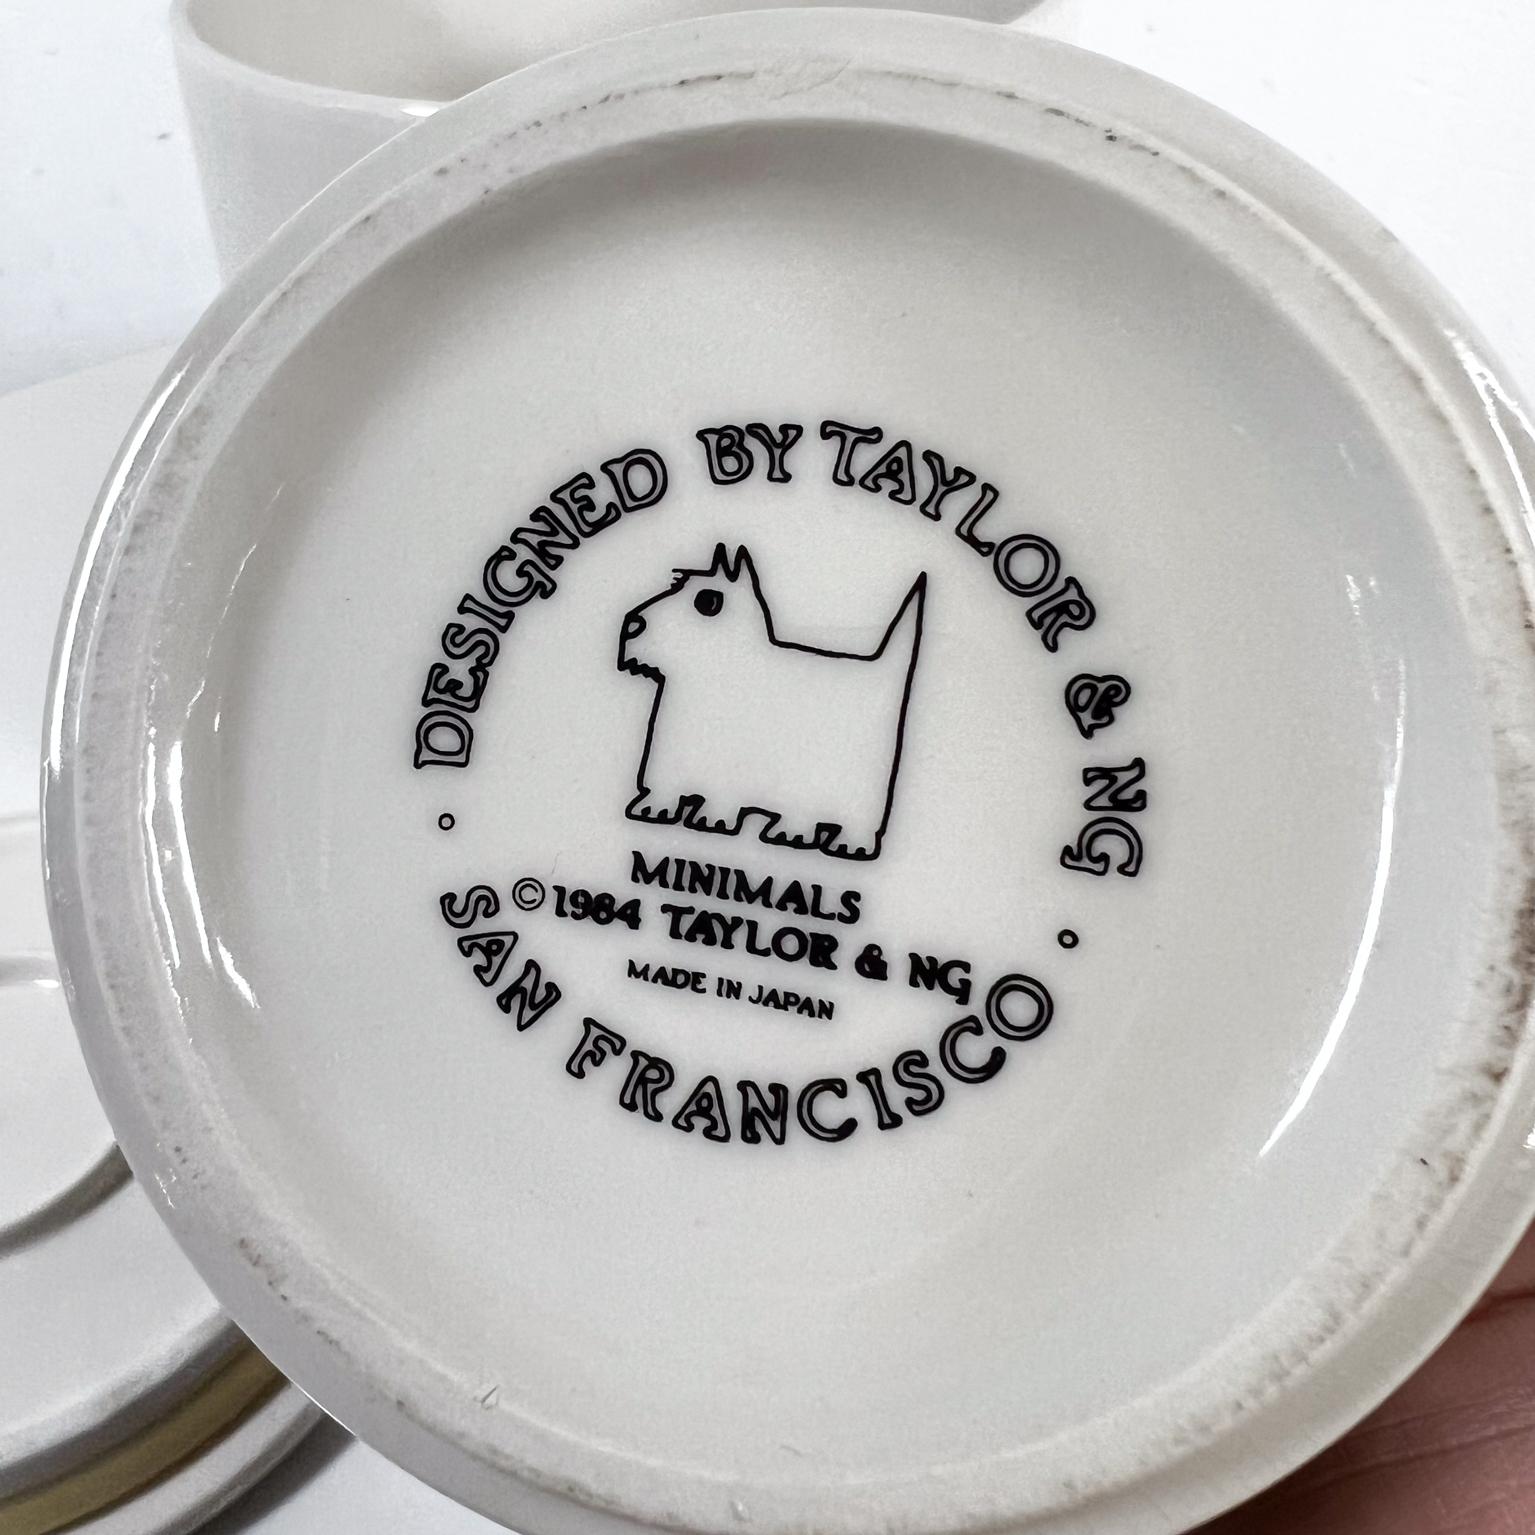 1984 Taylor & NG Minimals Scottish Terrier Dog Cookie Jar and Mug For Sale 2